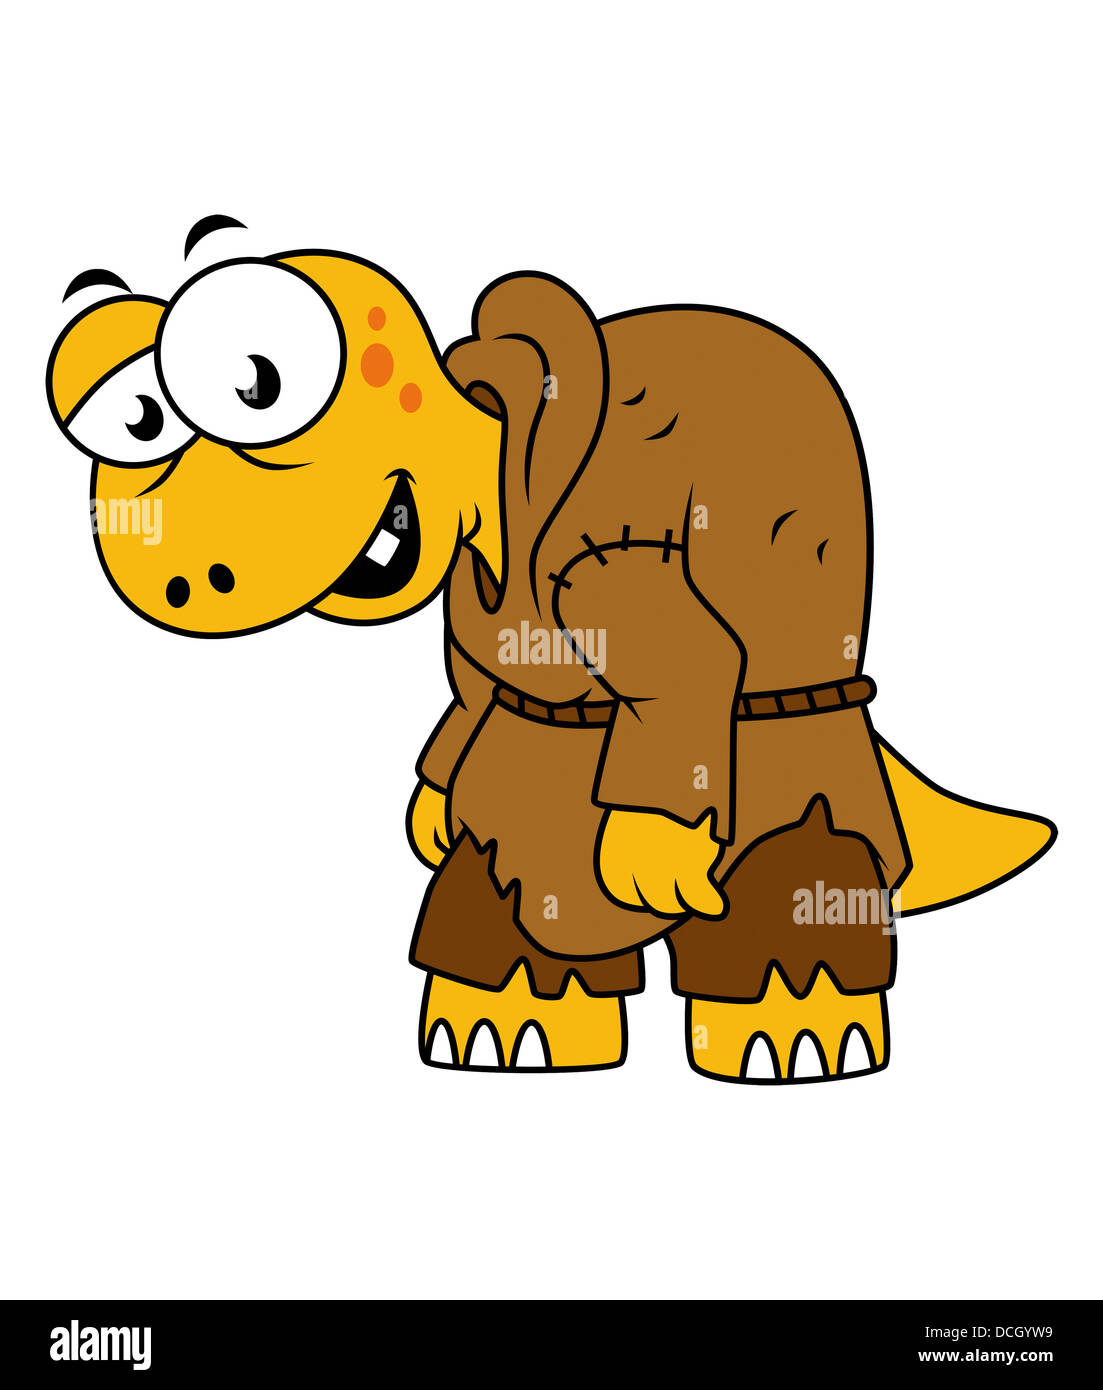 Cartoon illustration of a dinosaur hunchback. Stock Photo